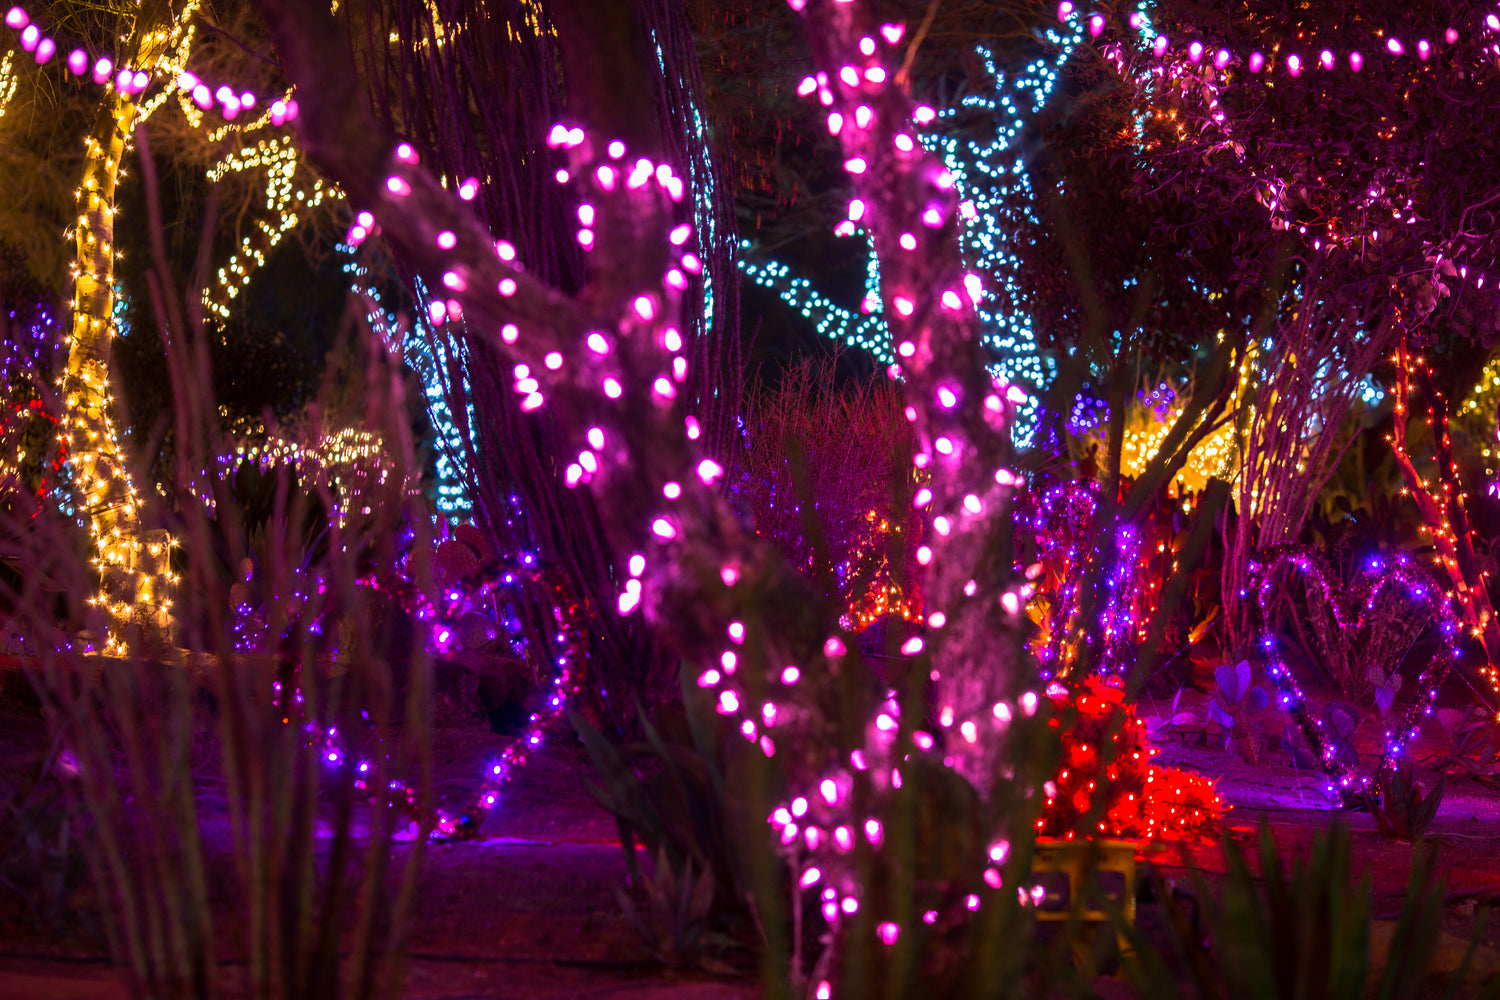 Visit Our Cactus Garden Lights of Love Ethel M Chocolates